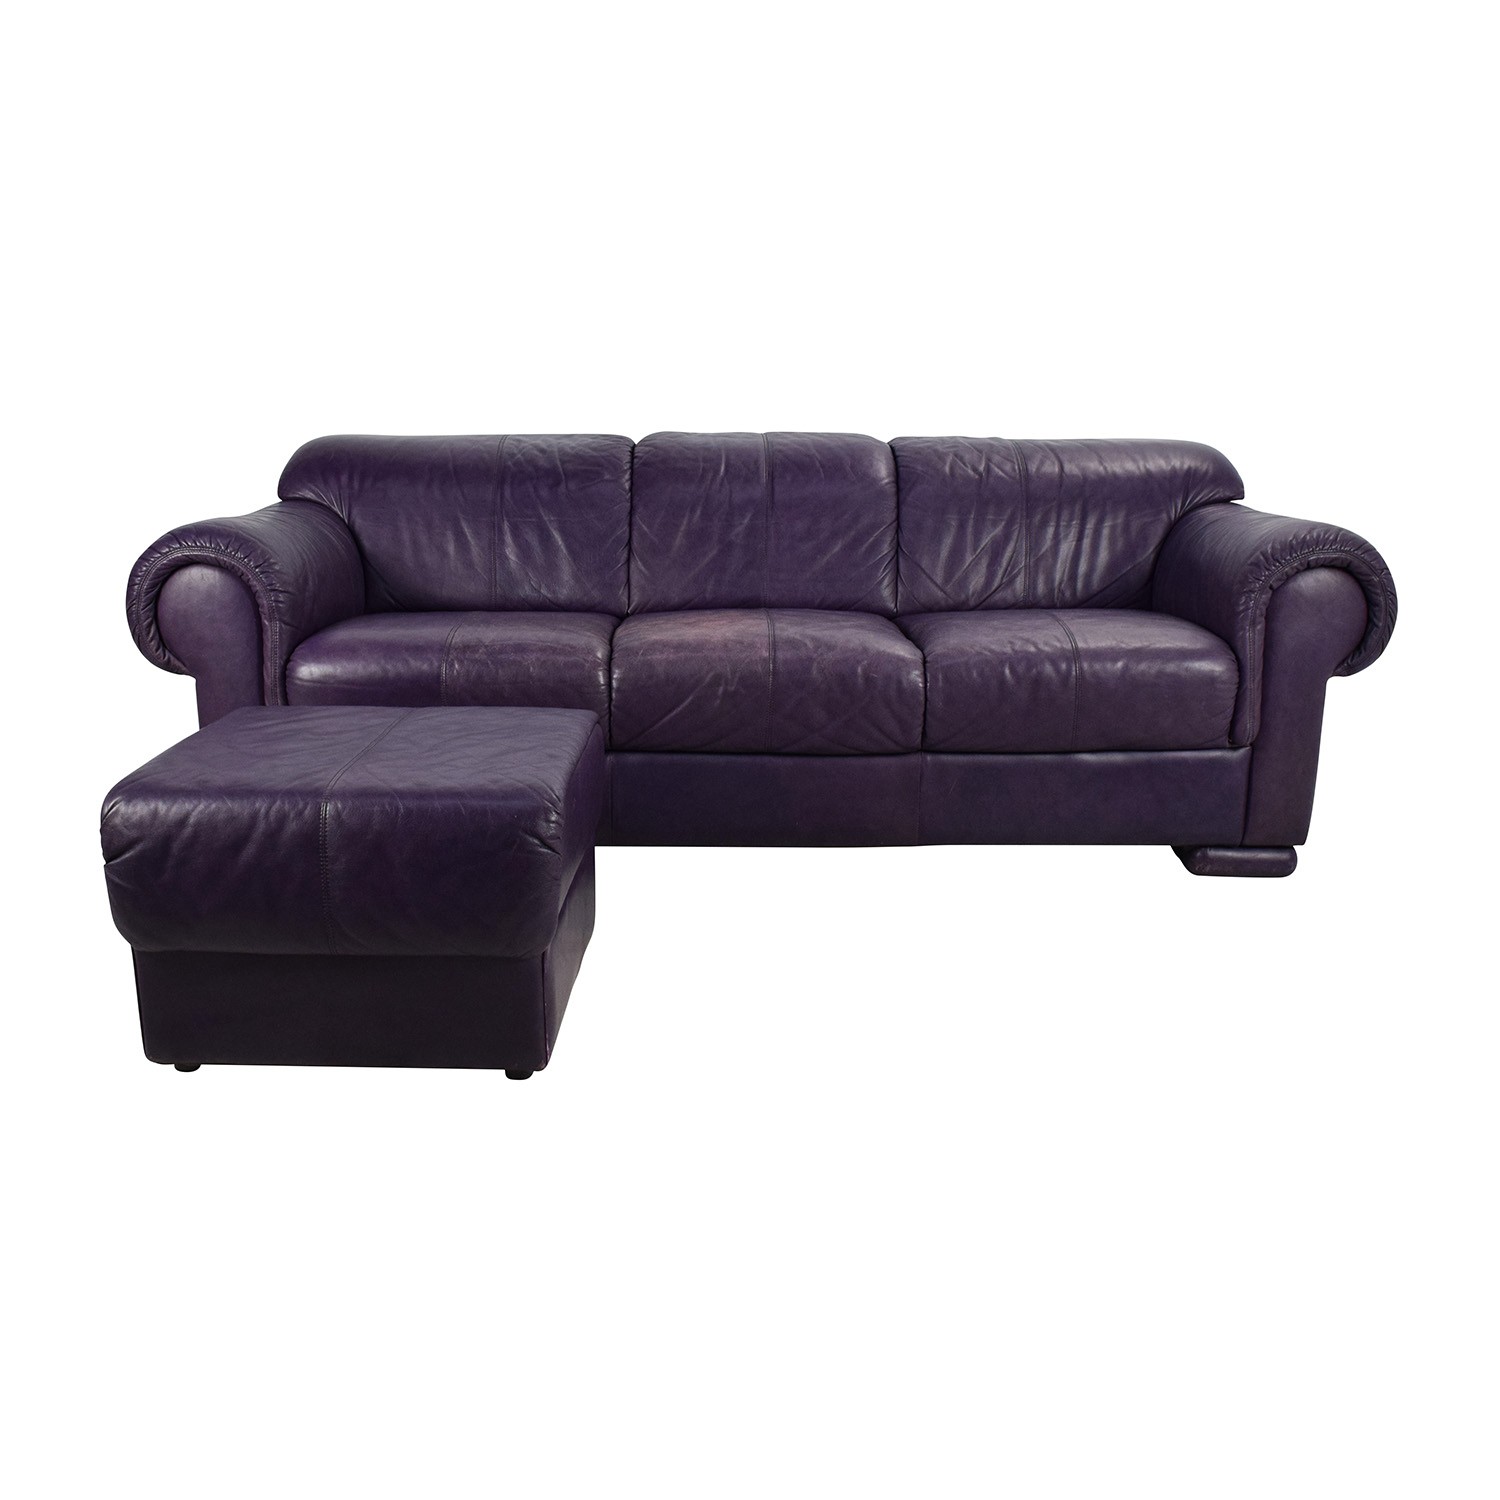 85 off himolla himolla purple leather sofa with ottoman 2